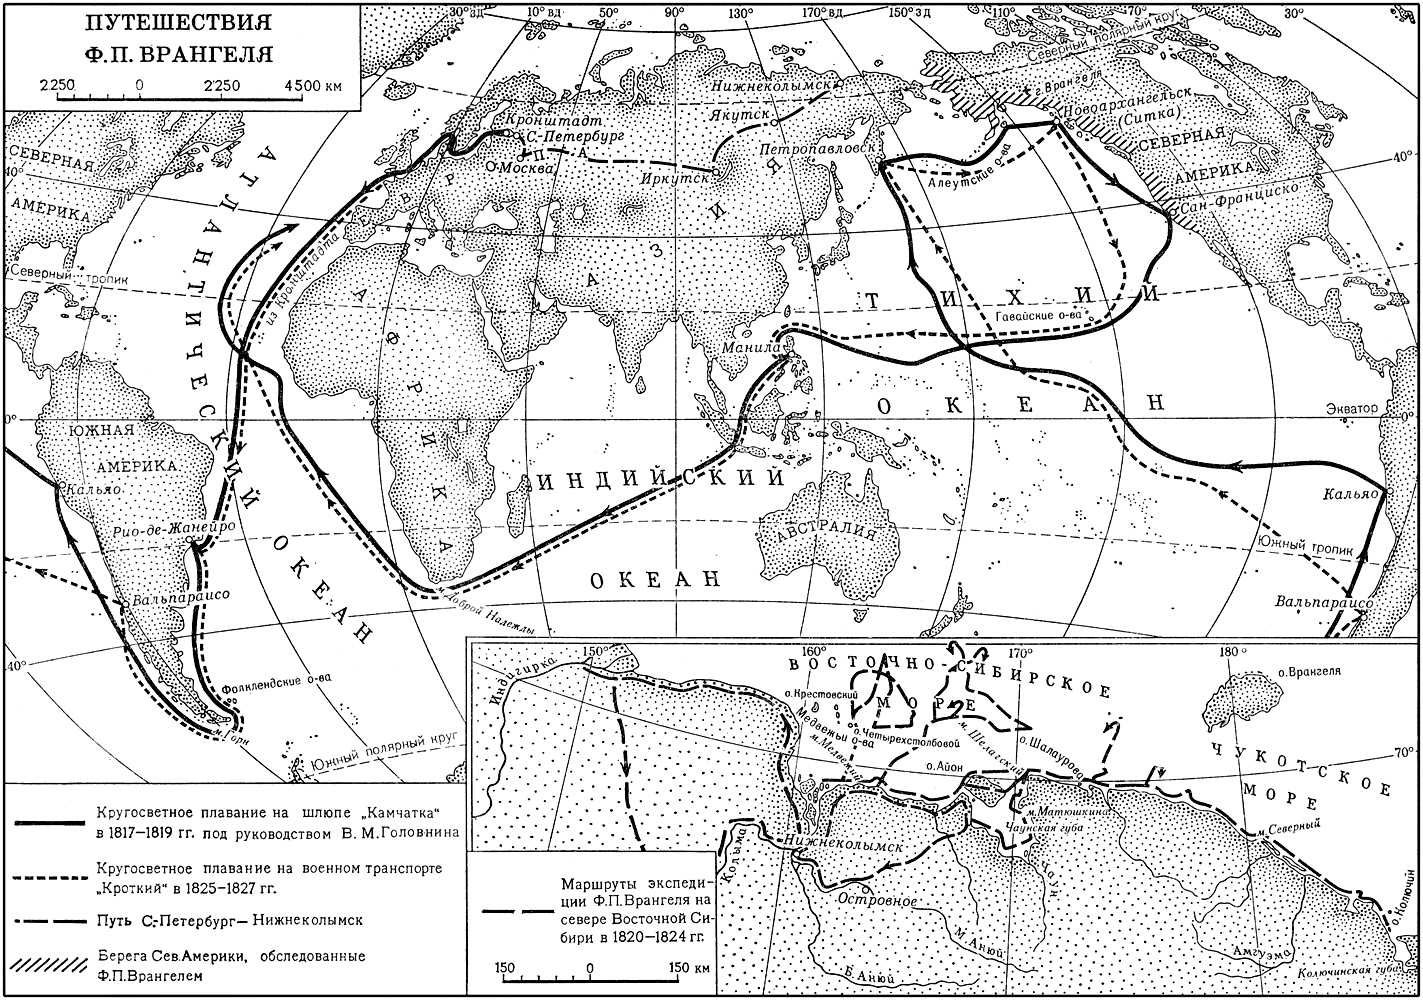  Карта путешествий Фердинанда Врангеля в Сибири и Америке.